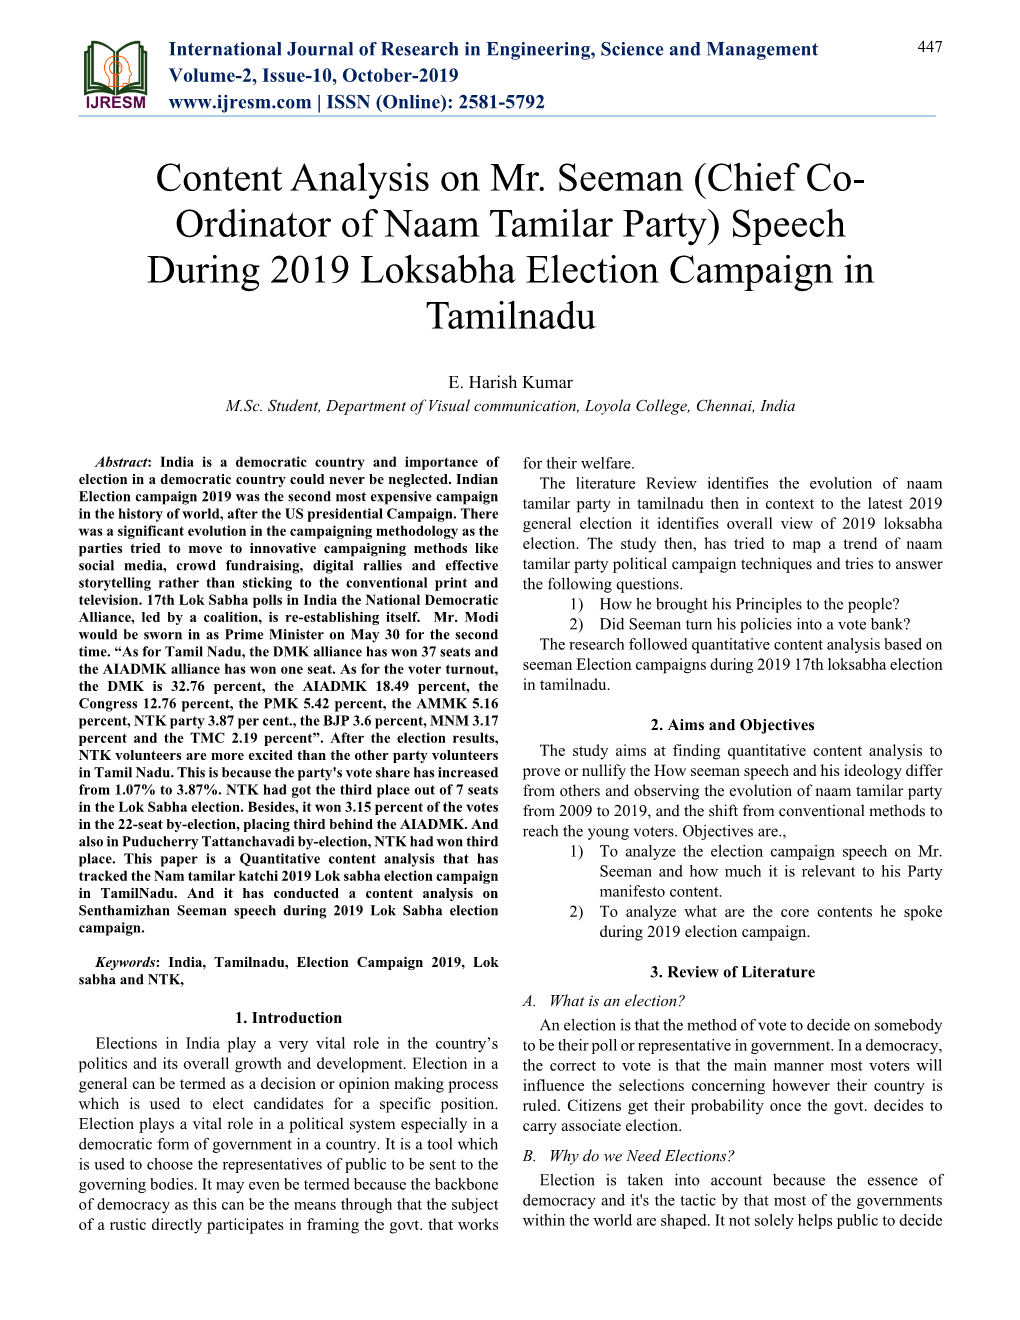 Content Analysis on Mr. Seeman (Chief Co- Ordinator of Naam Tamilar Party) Speech During 2019 Loksabha Election Campaign in Tamilnadu